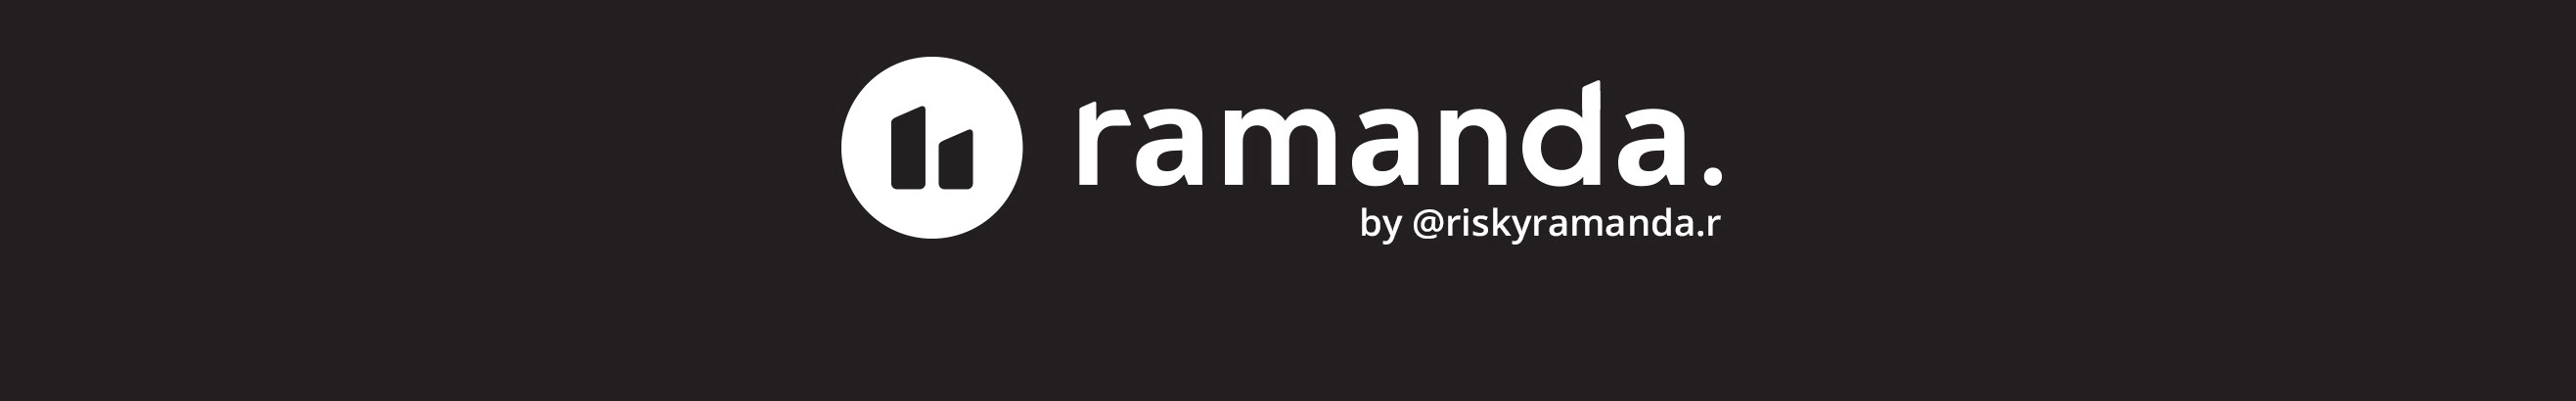 Bannière de profil de Risky Ramanda